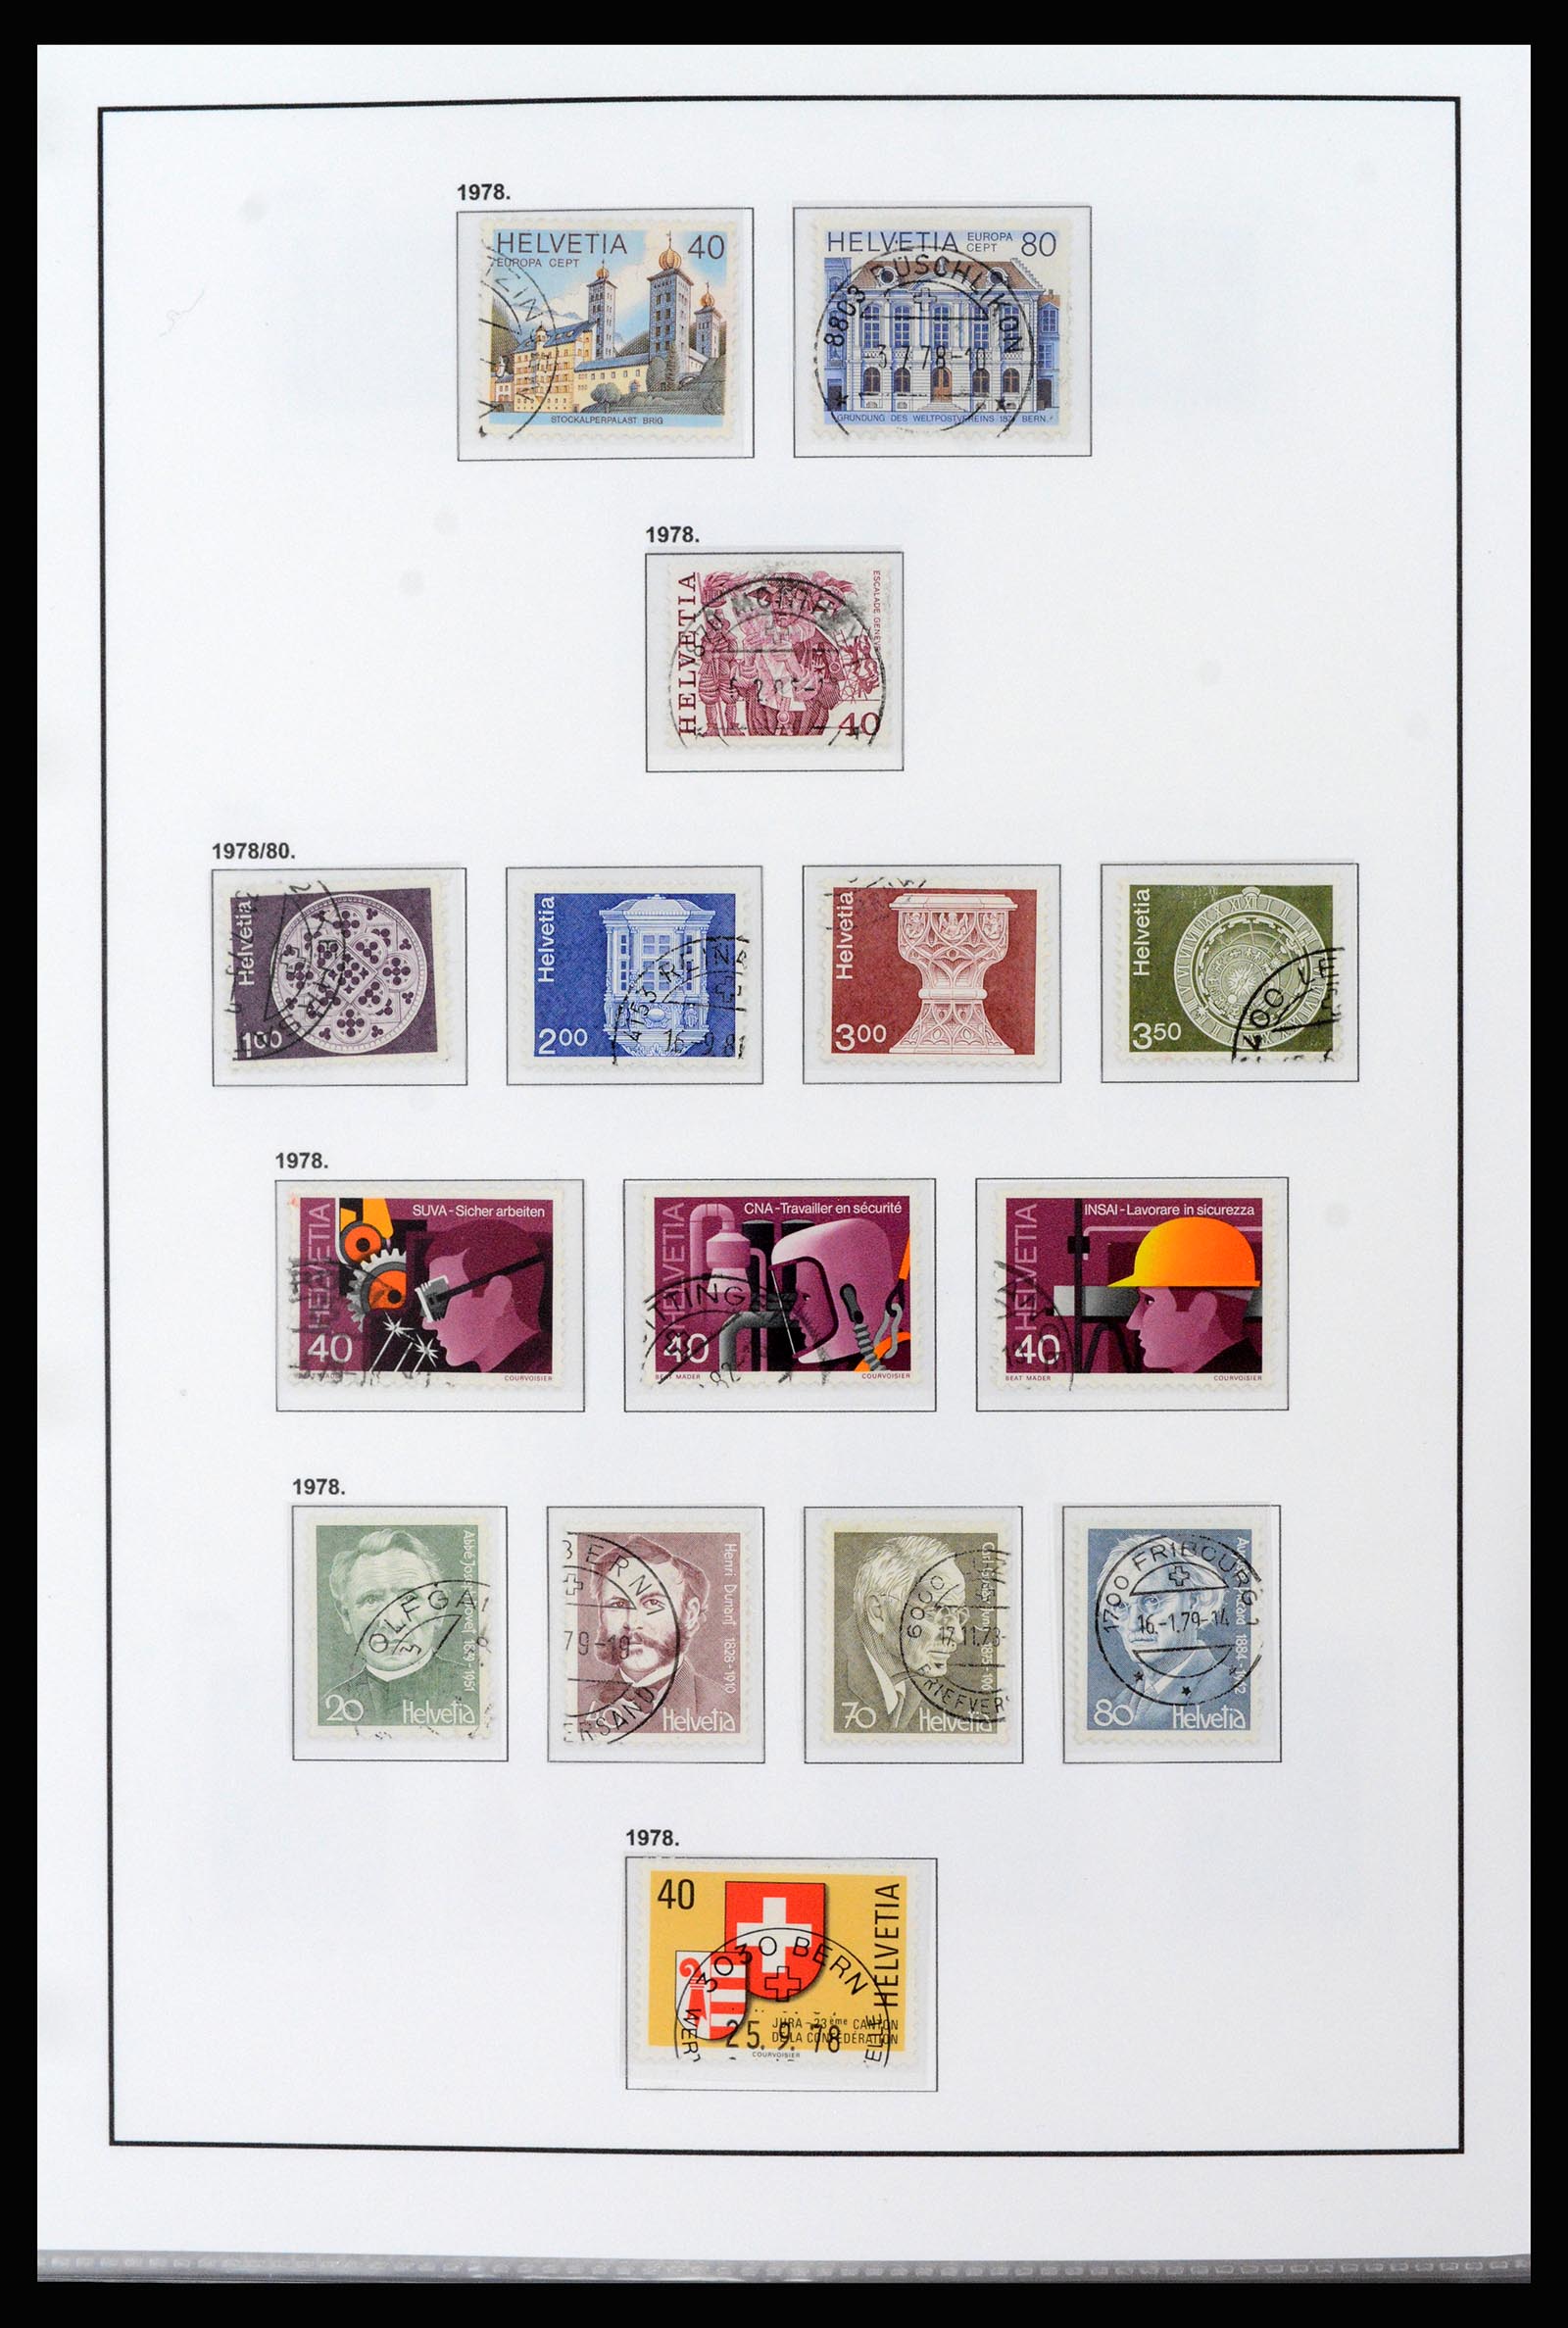 37225 038 - Stamp collection 37225 Switzerland 1854-2020.